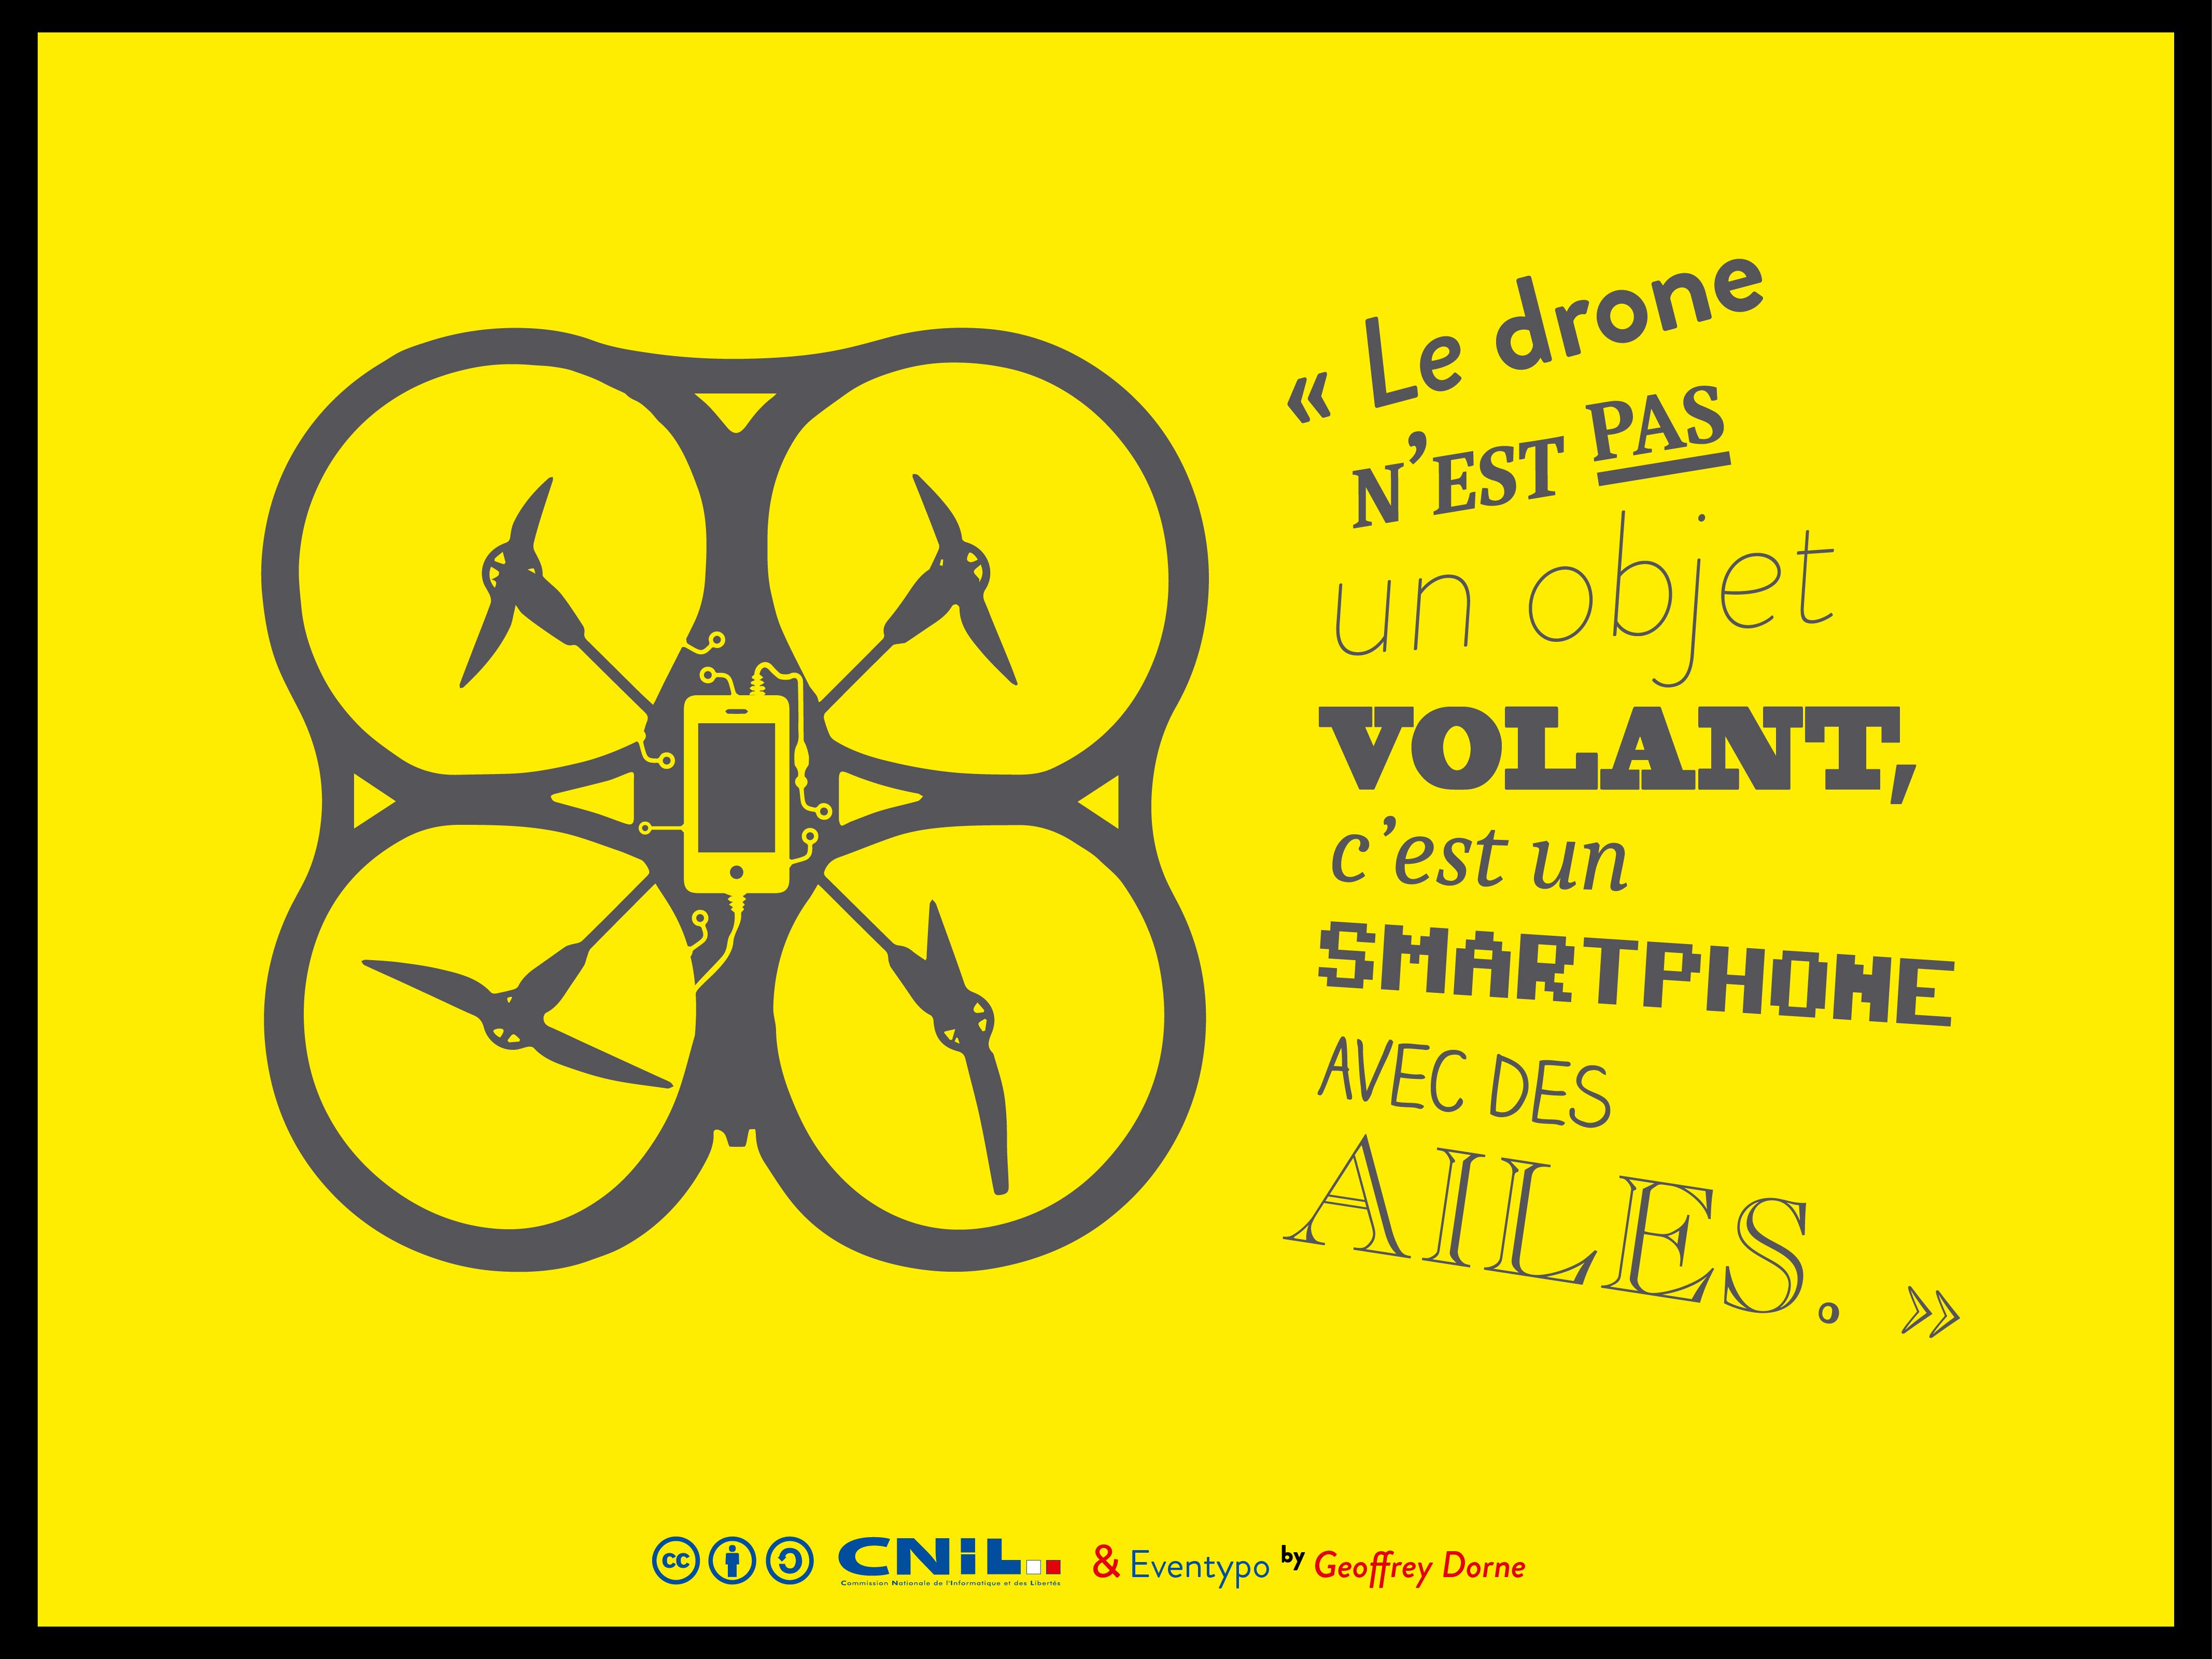 quotes_2015_cnil_geoffrey_dorne_drones.jpg